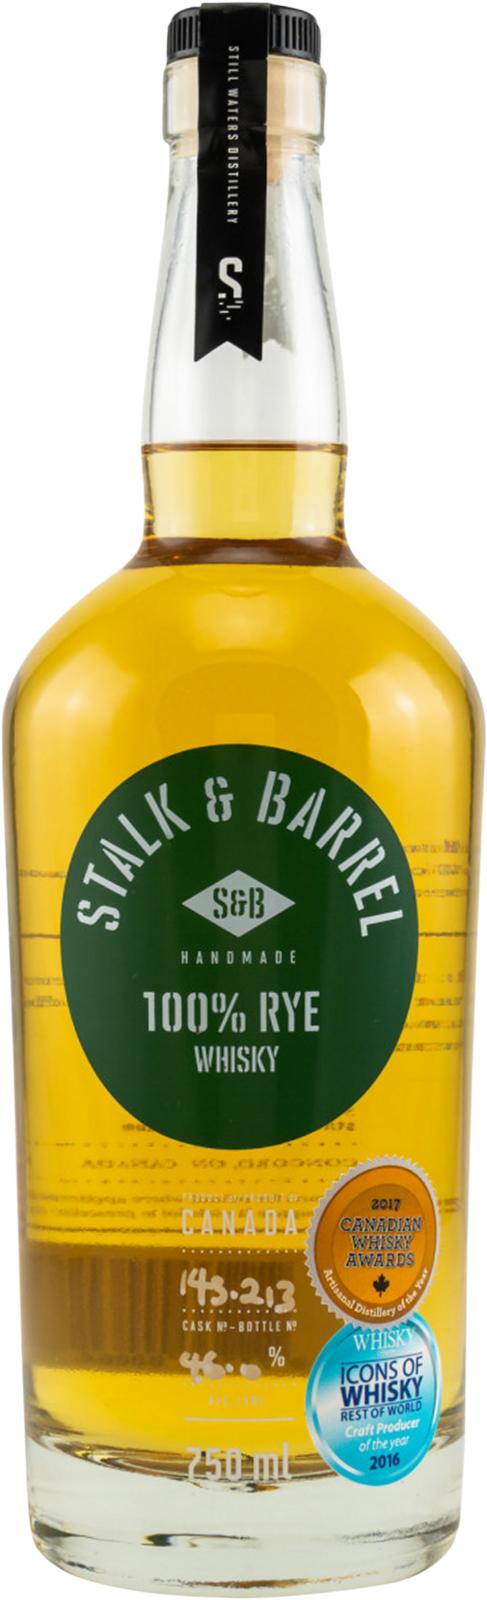 Stalk & Barrel 100% Rye #143 46% 750ml